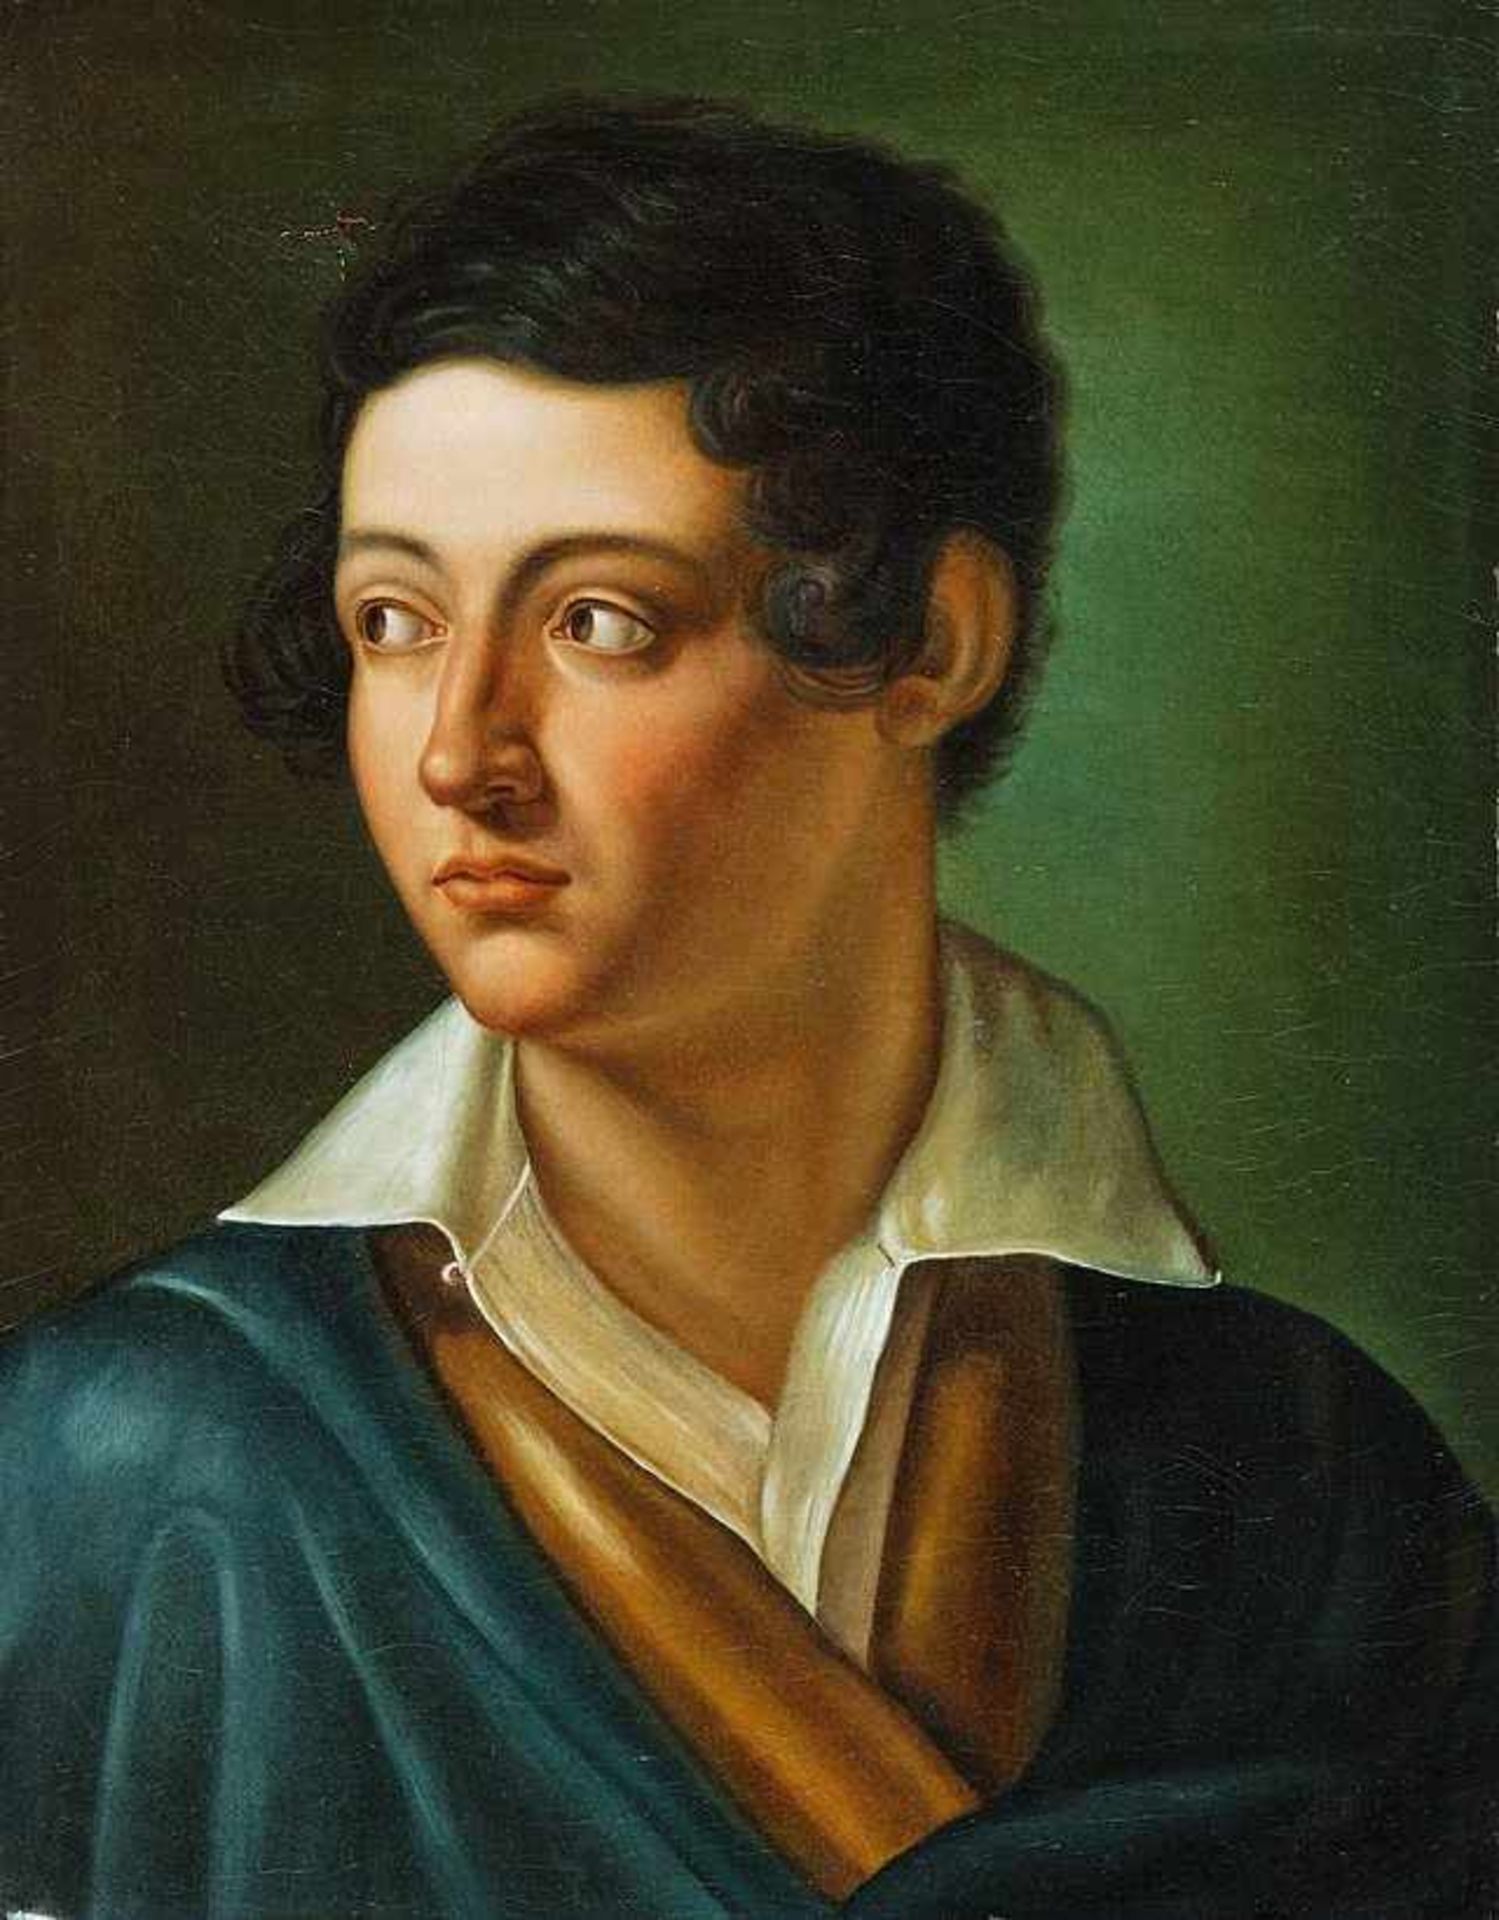 Düsseldorfer Porträtmaler (Anf. 19. Jh.) Dunkelhaariger Jüngling in weißem Hemd mit blauem Umhang.